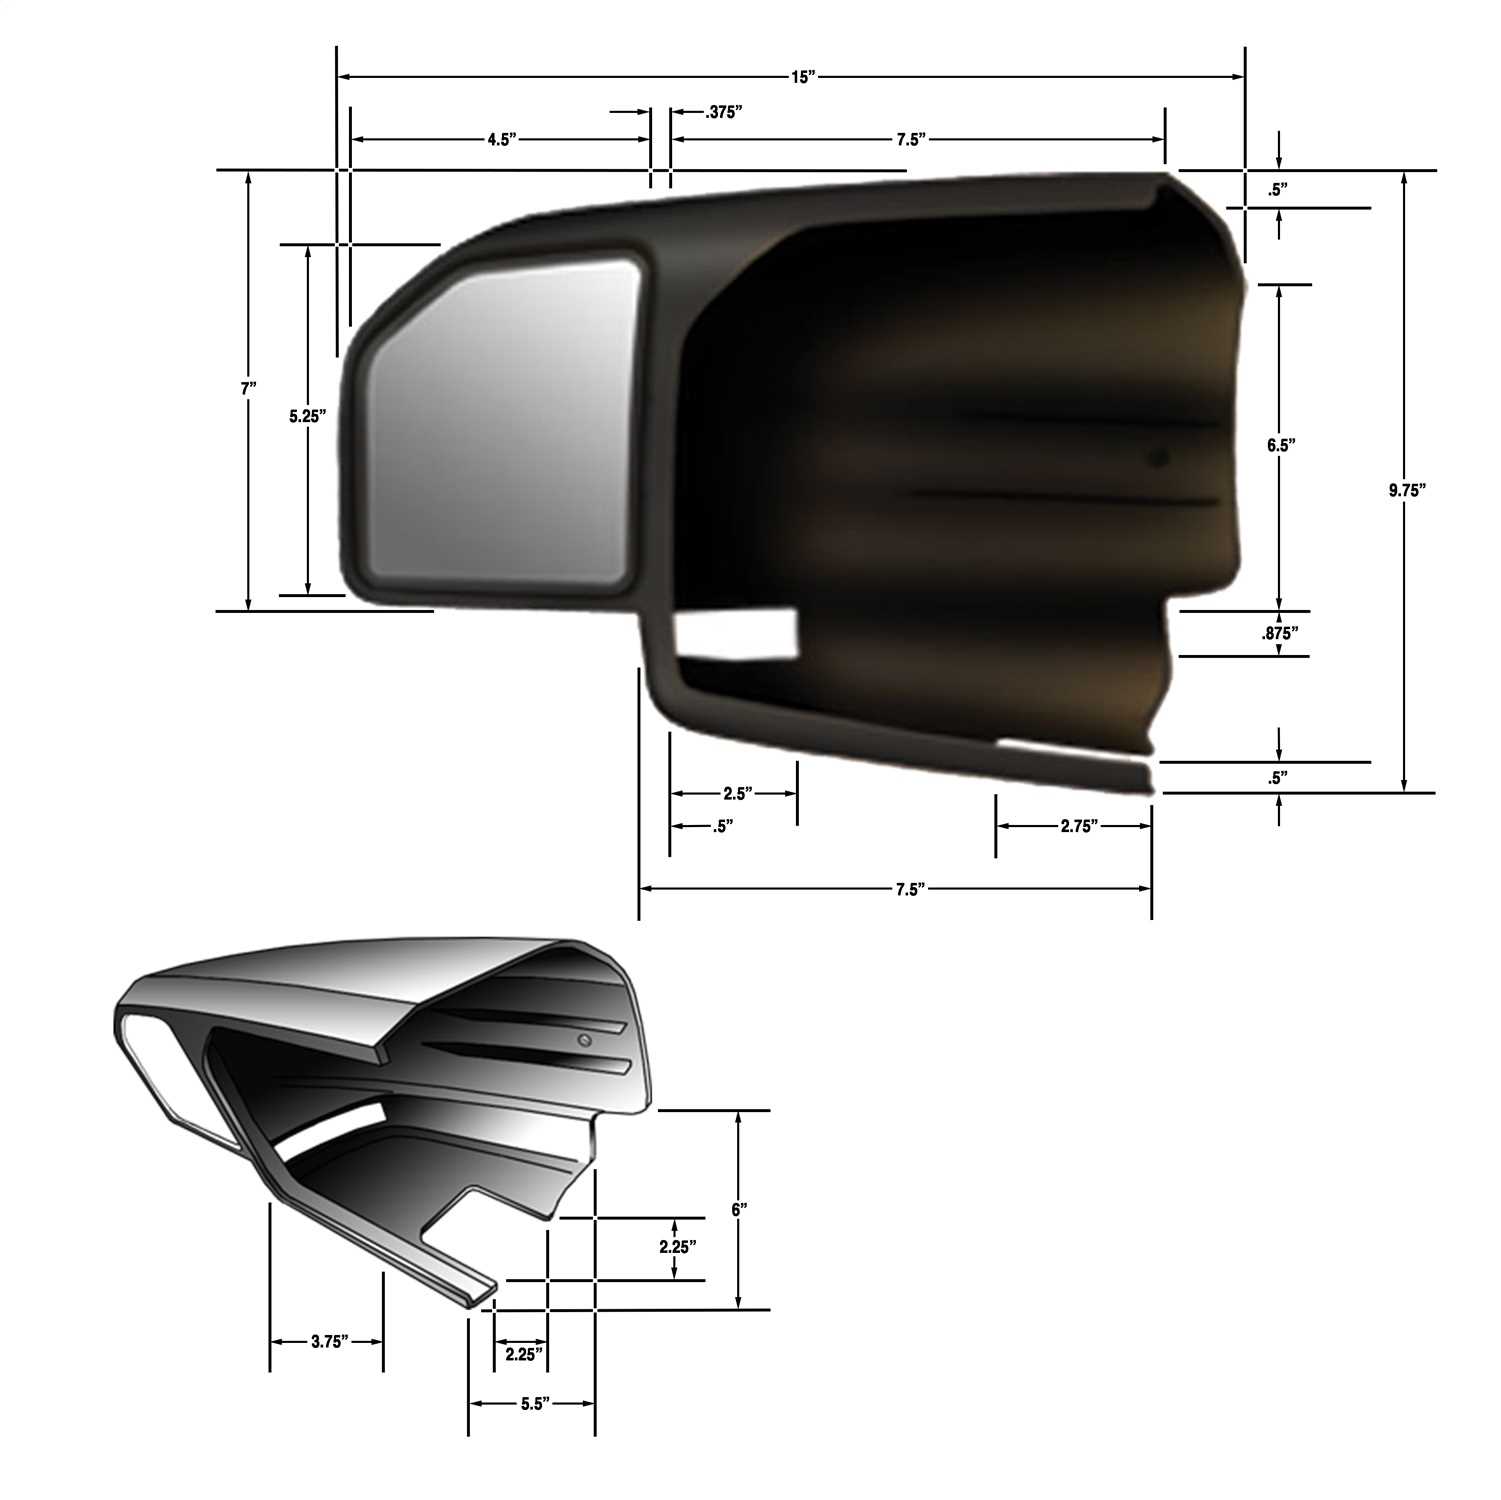 Longview Driver and Passenger Side Custom Towing Mirrors Installation -  2020 Chevrolet Silverado 150 